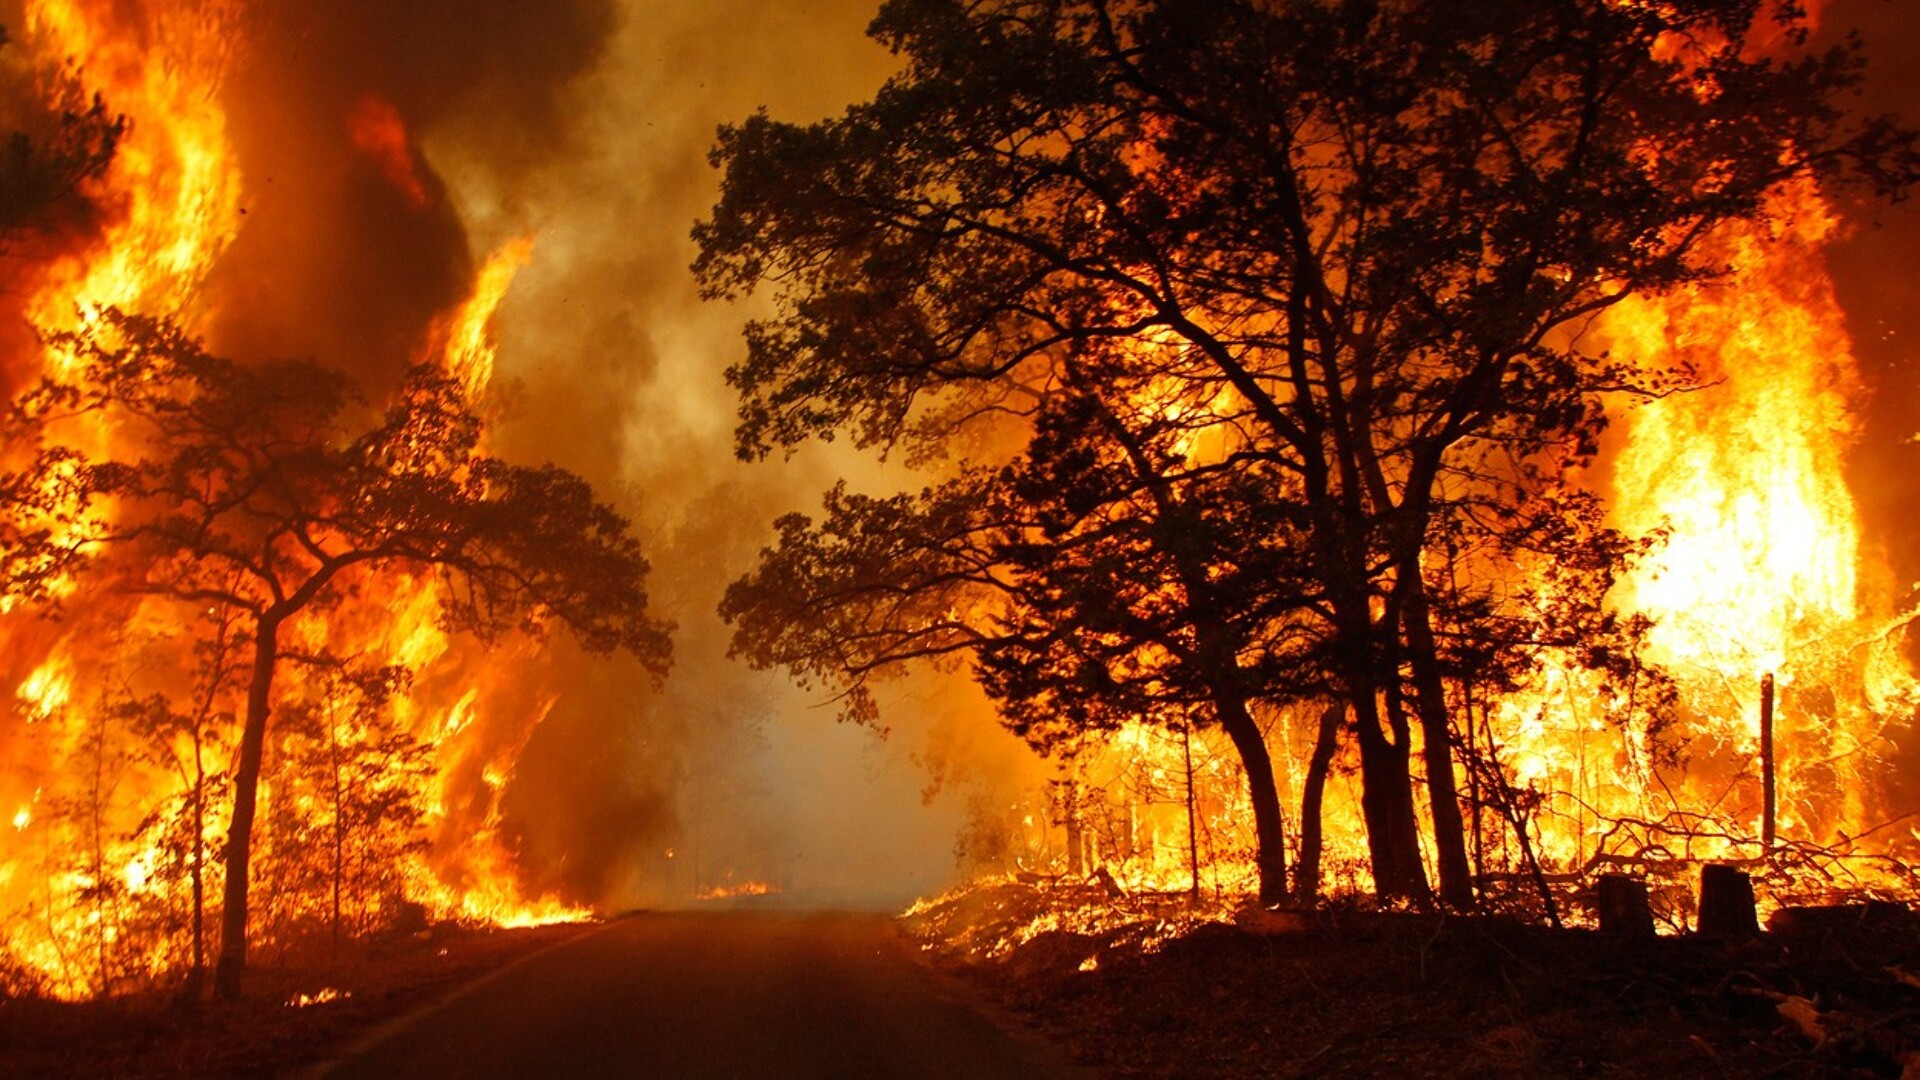 Wildfire Risk Assessment 